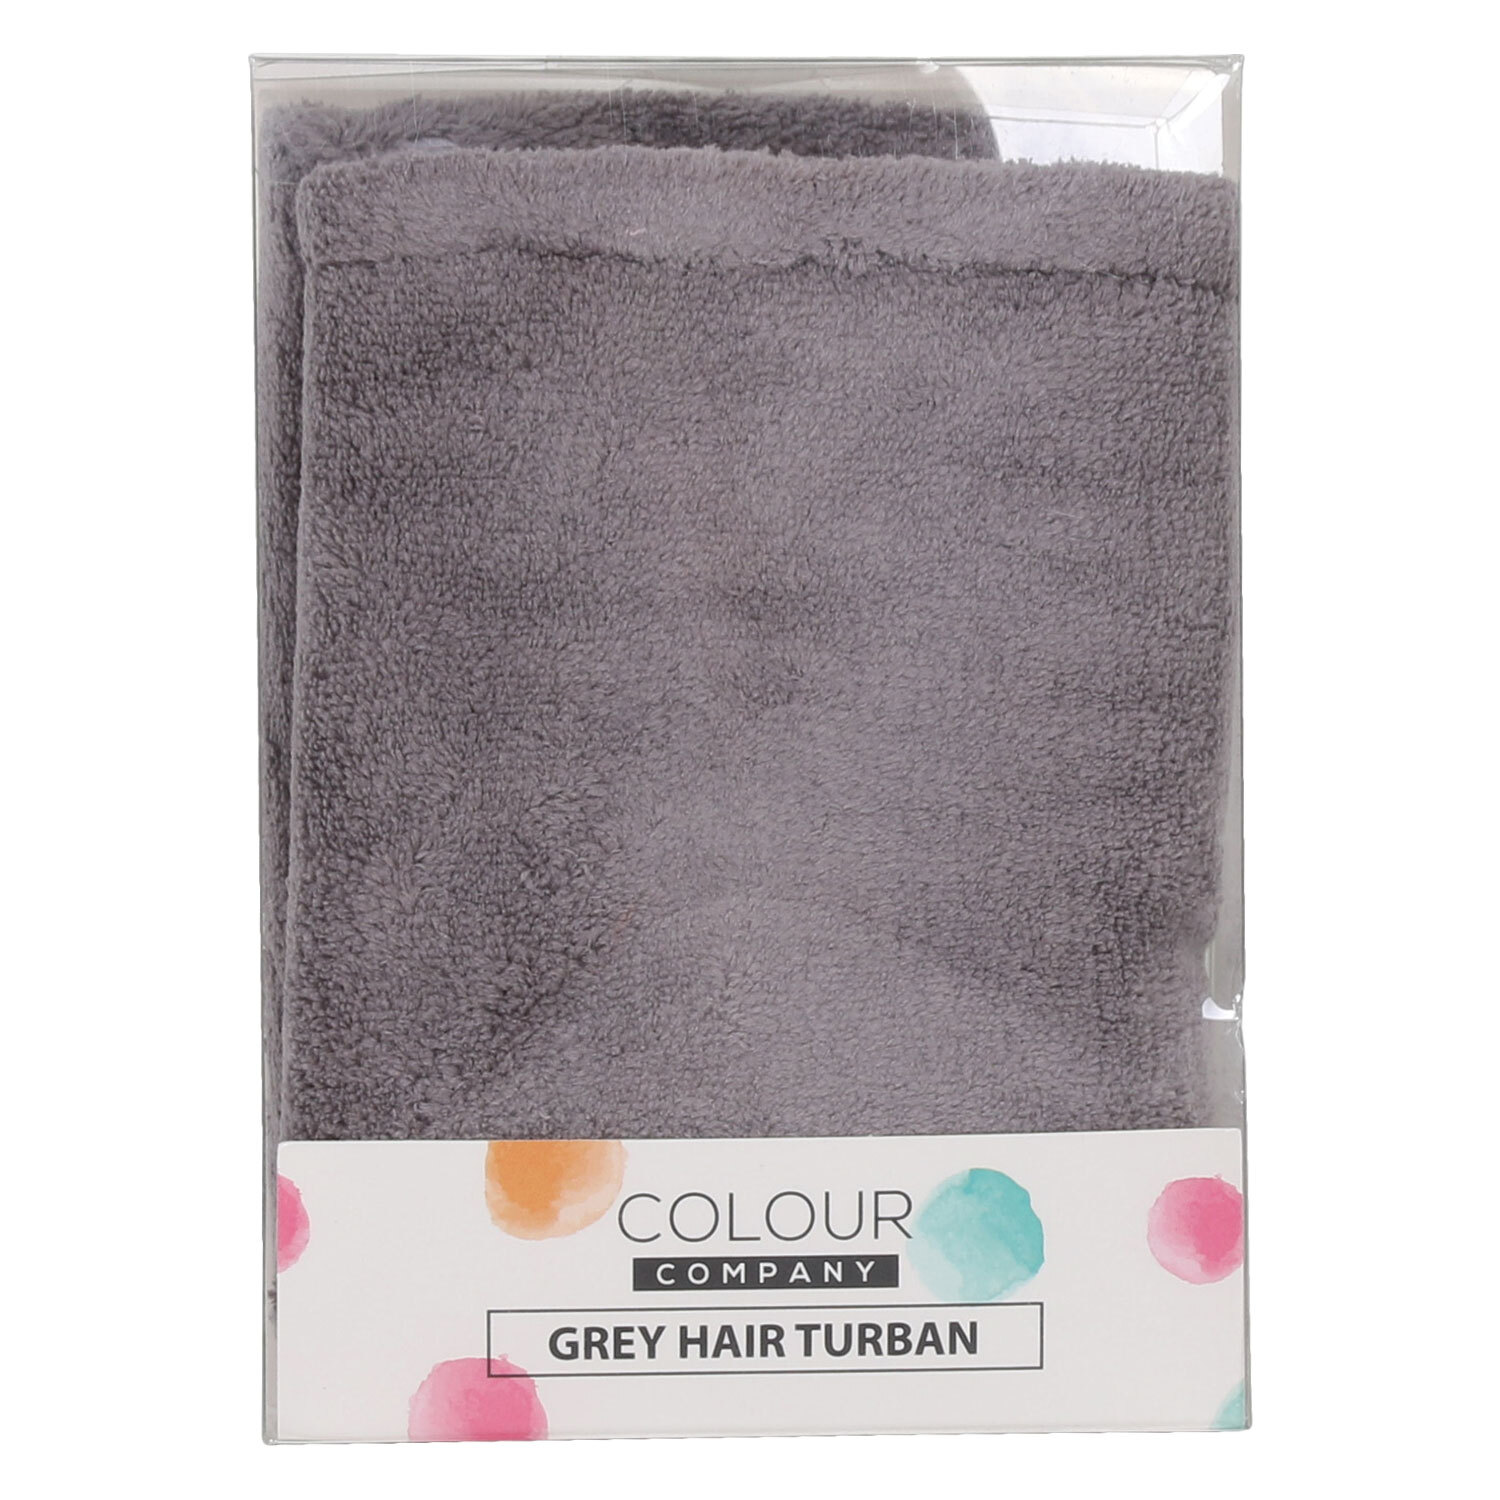 Colour Company Grey Hair Turban Image